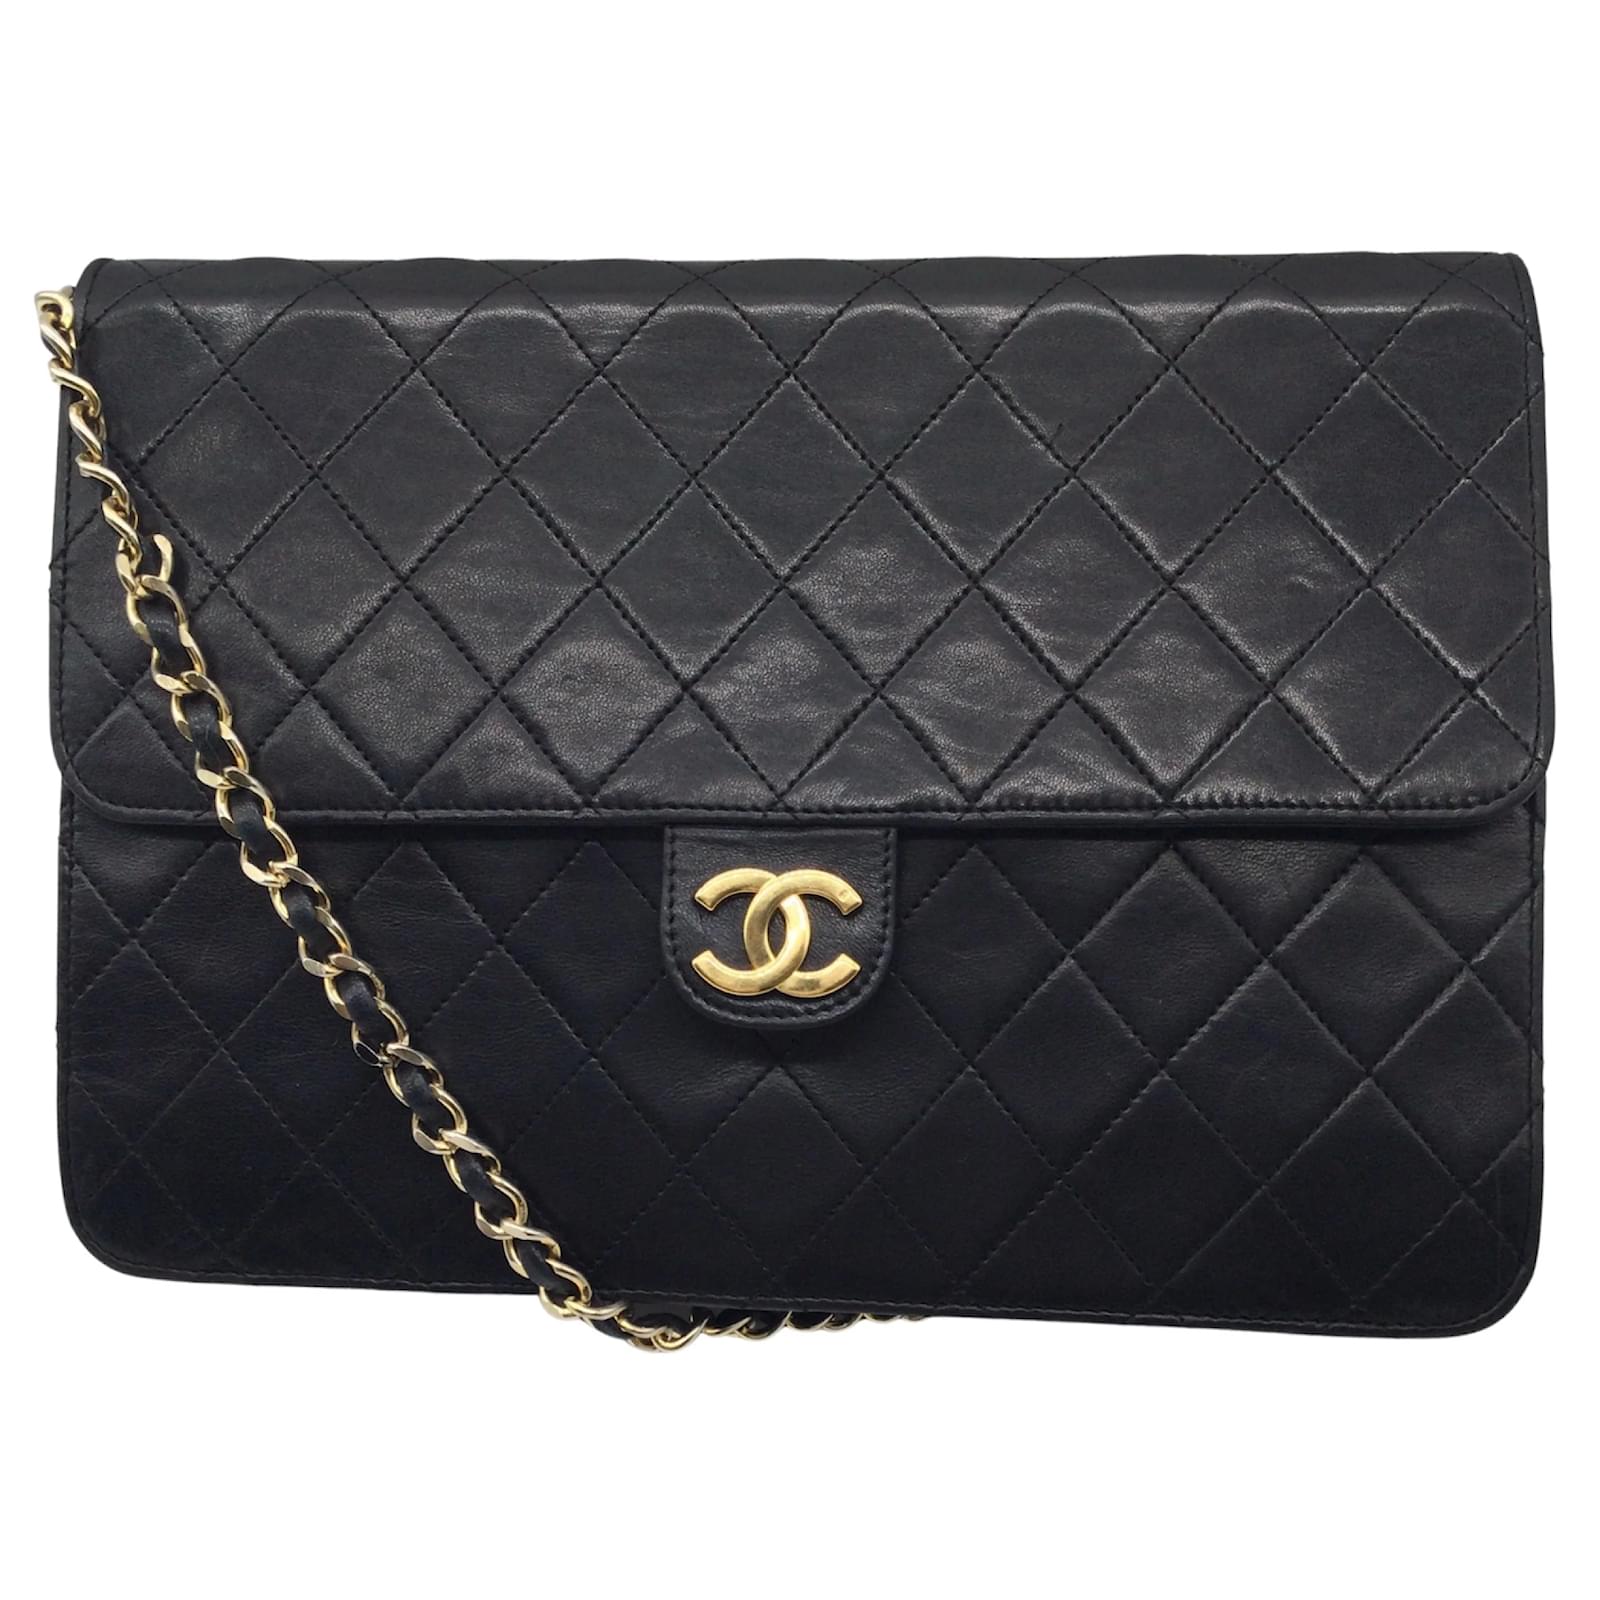 Handbags Chanel Chanel Classic Vintage Flap Black Lambskin Leather Shoulder Bag